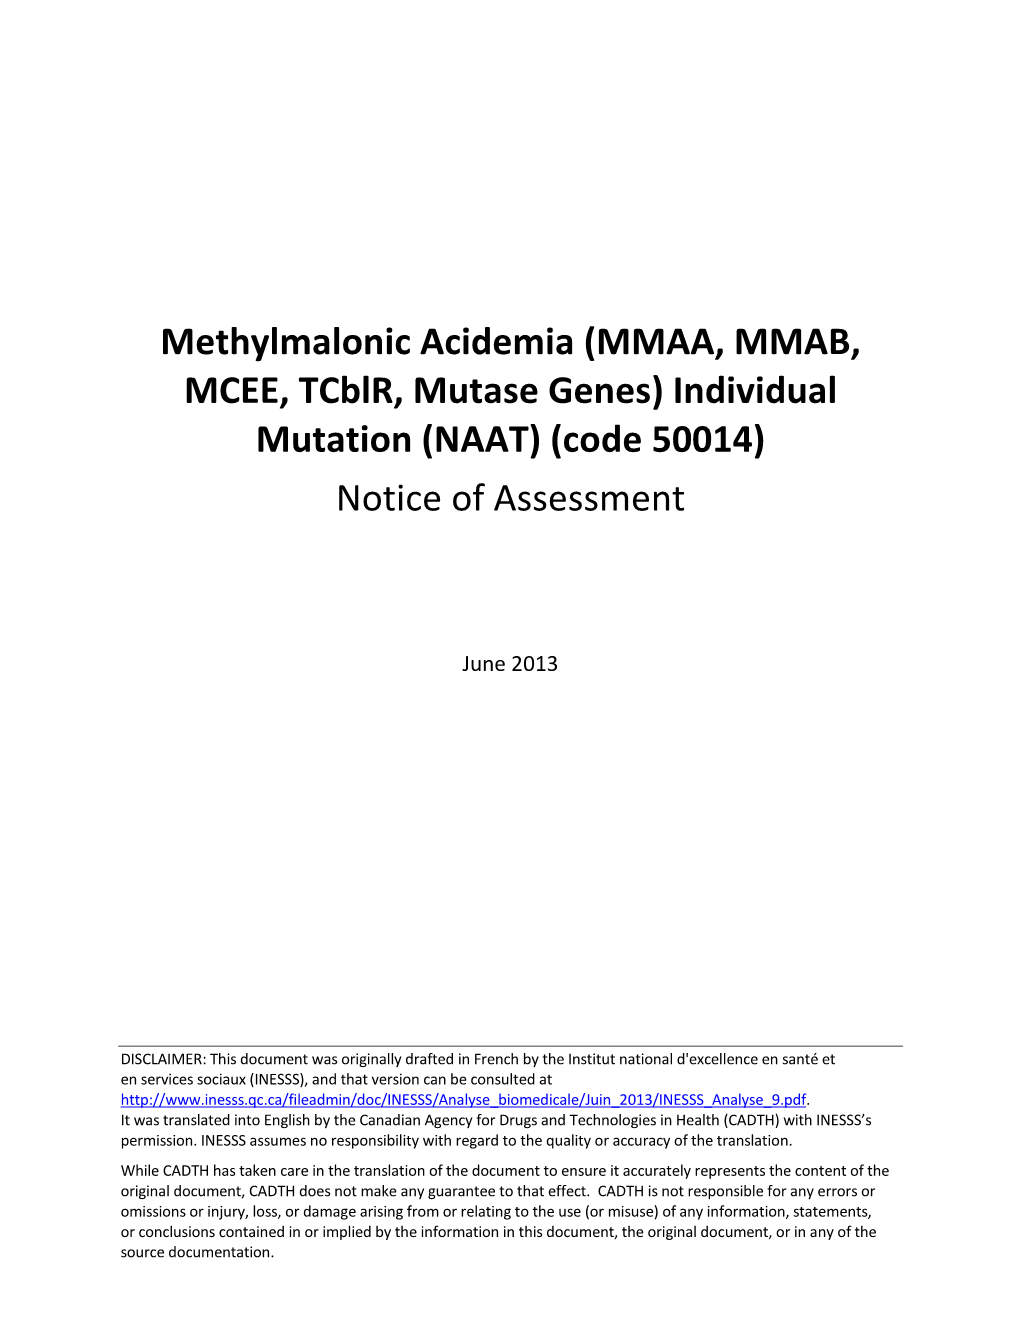 Methylmalonic Acidemia (MMAA, MMAB, MCEE, Tcblr, Mutase Genes) Individual Mutation (NAAT) (Code 50014) Notice of Assessment